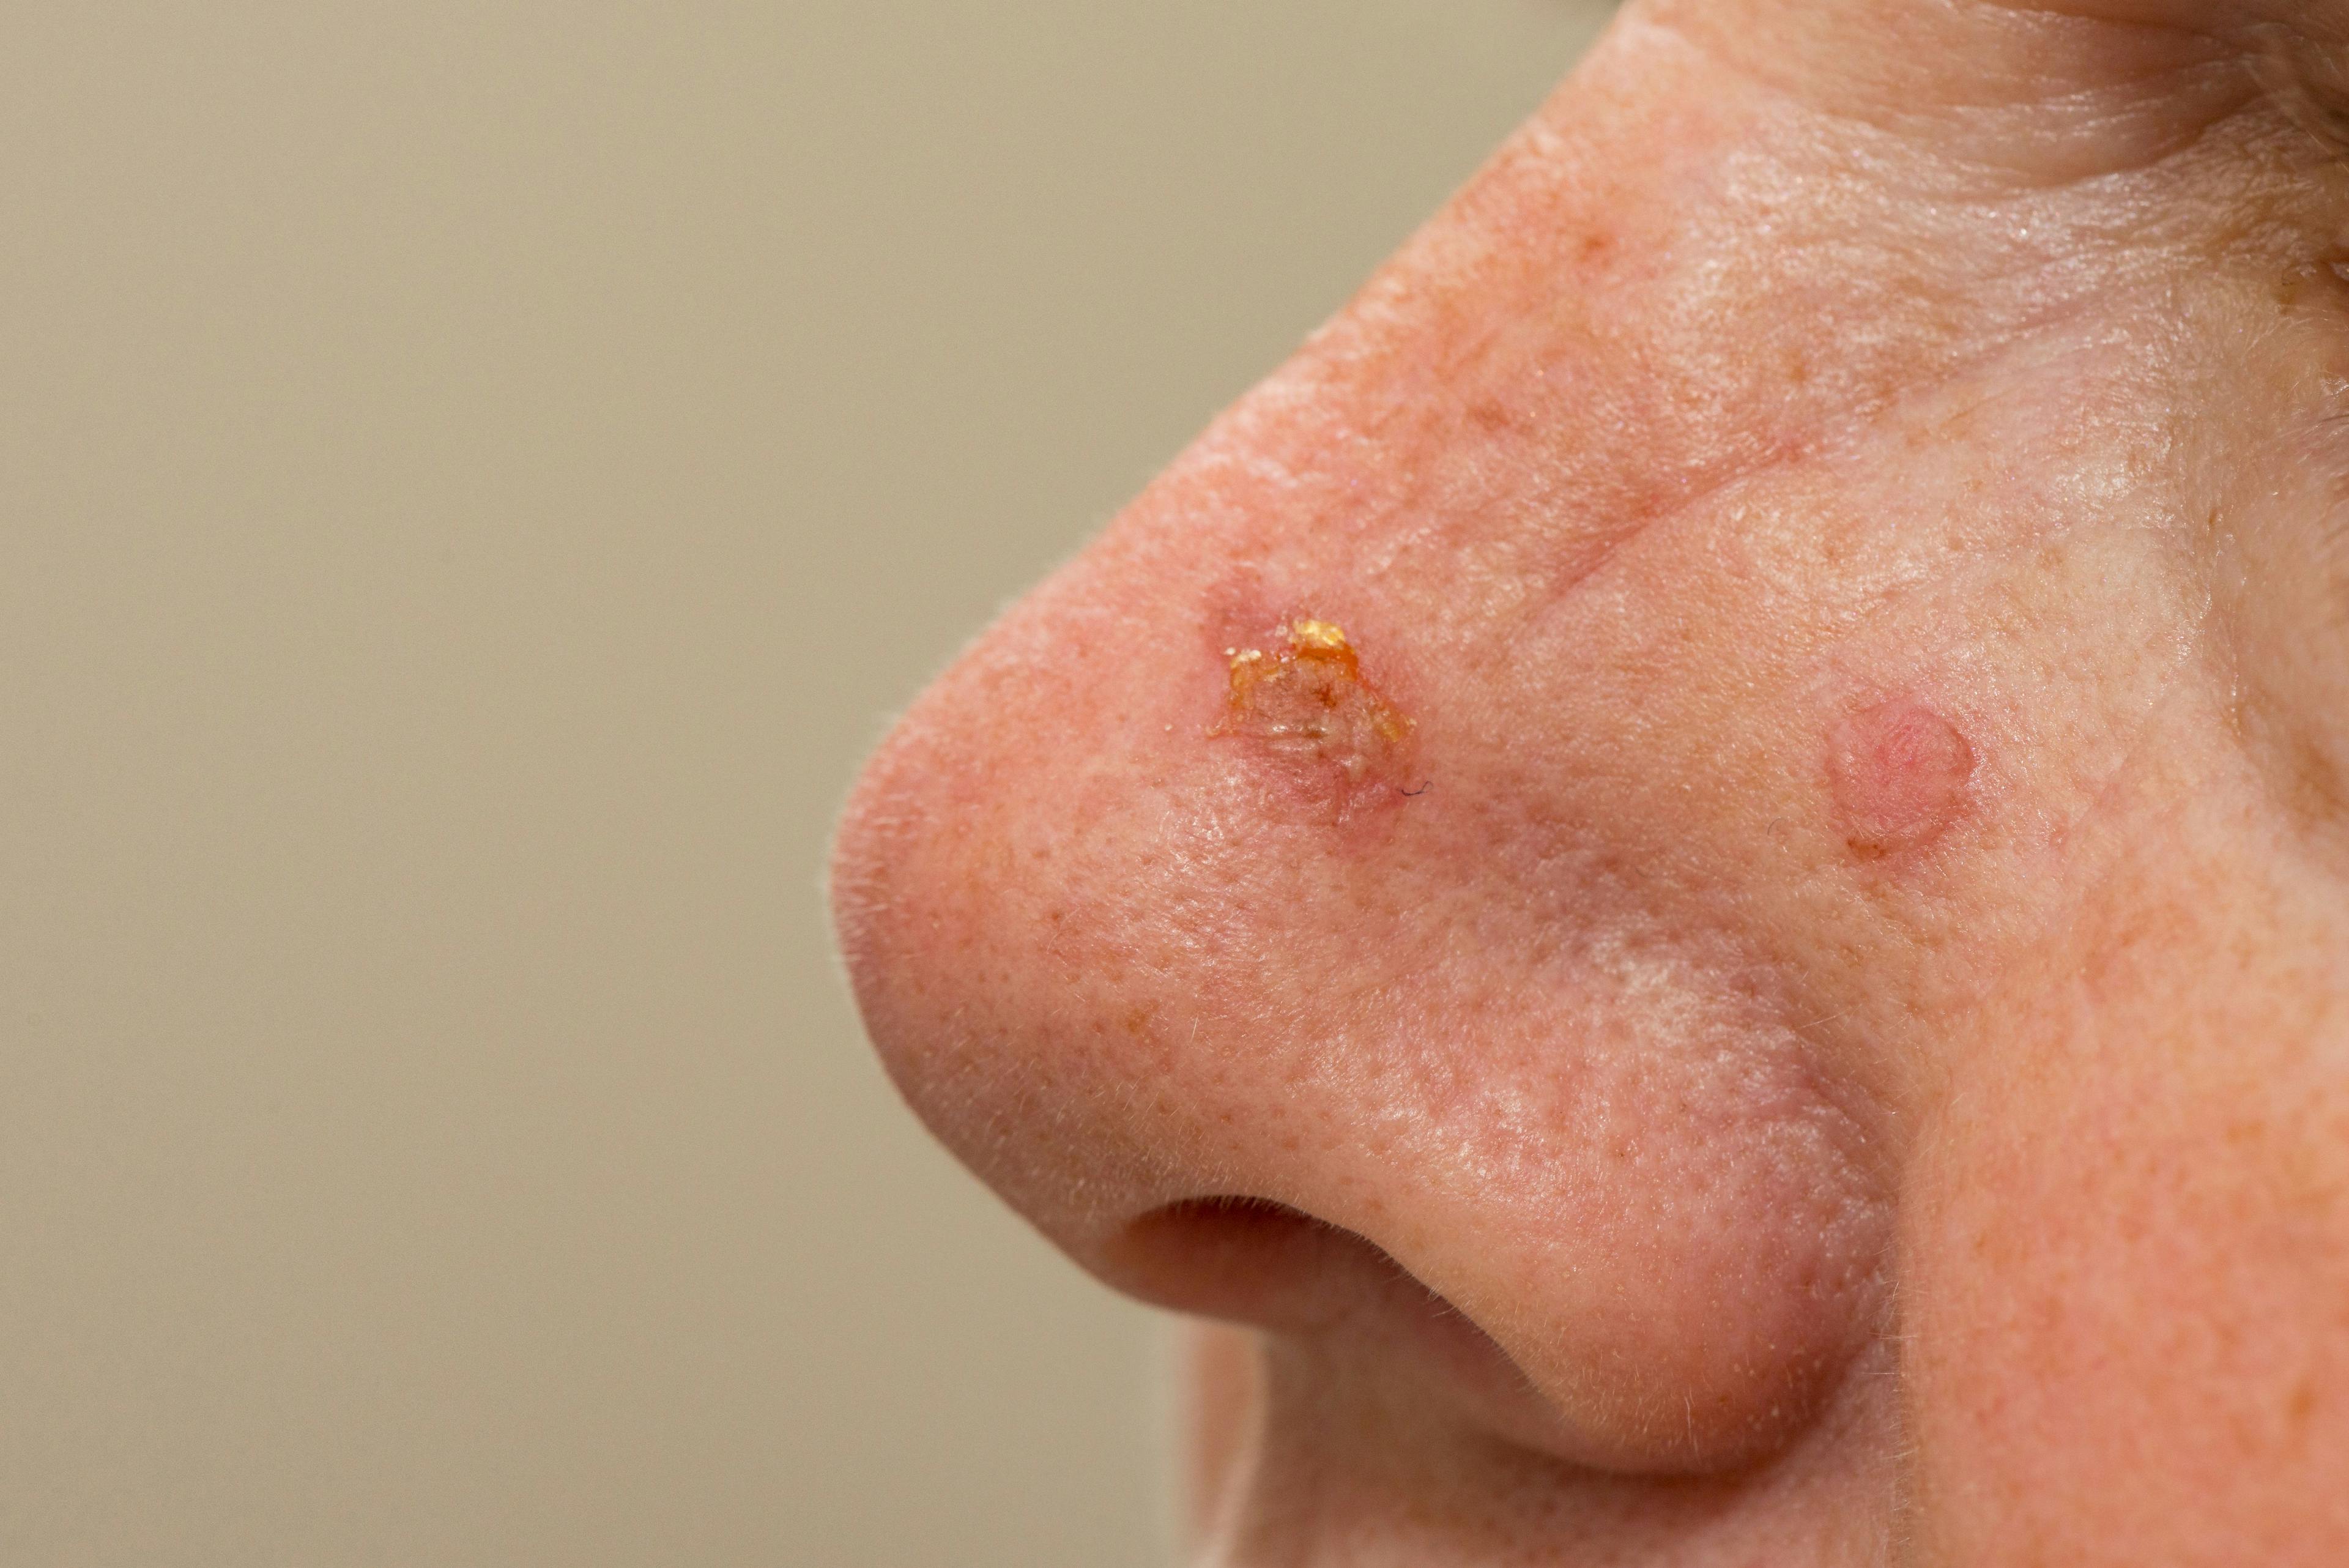 Actinic keratosis are a common precancerous skin lesion | image credit: clsdesign - stock.adobe.com